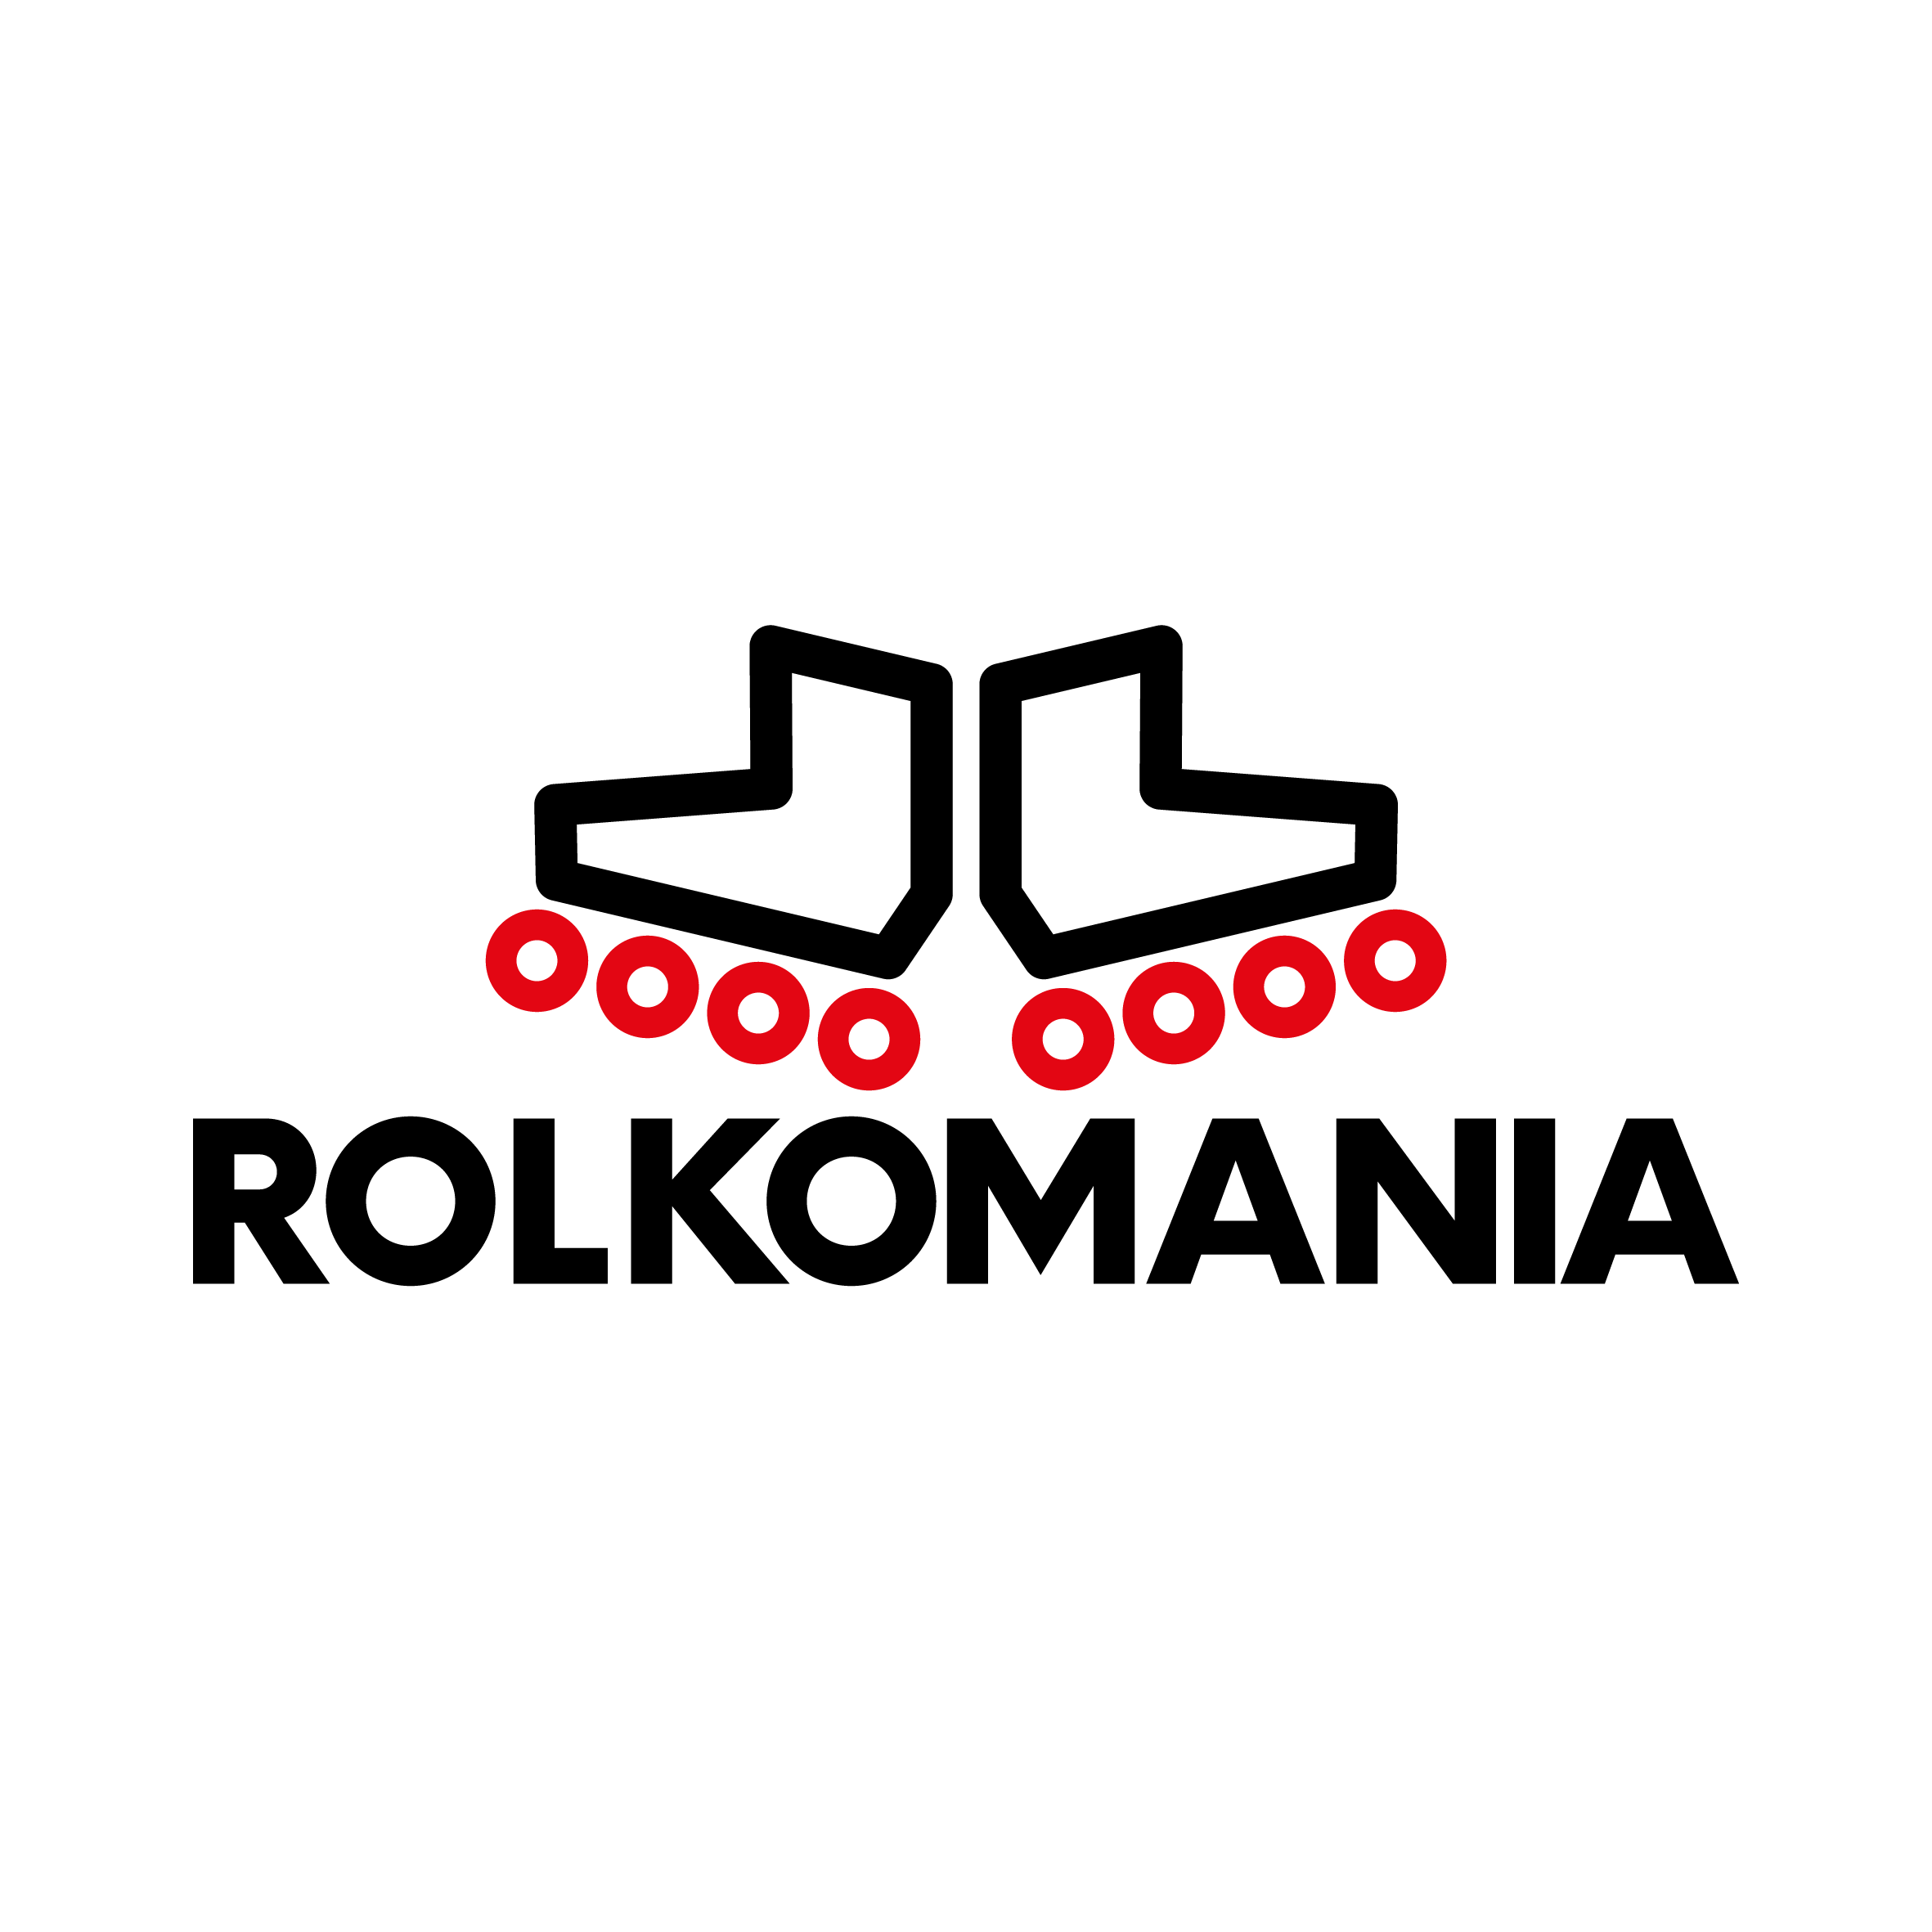 rolkomania logo